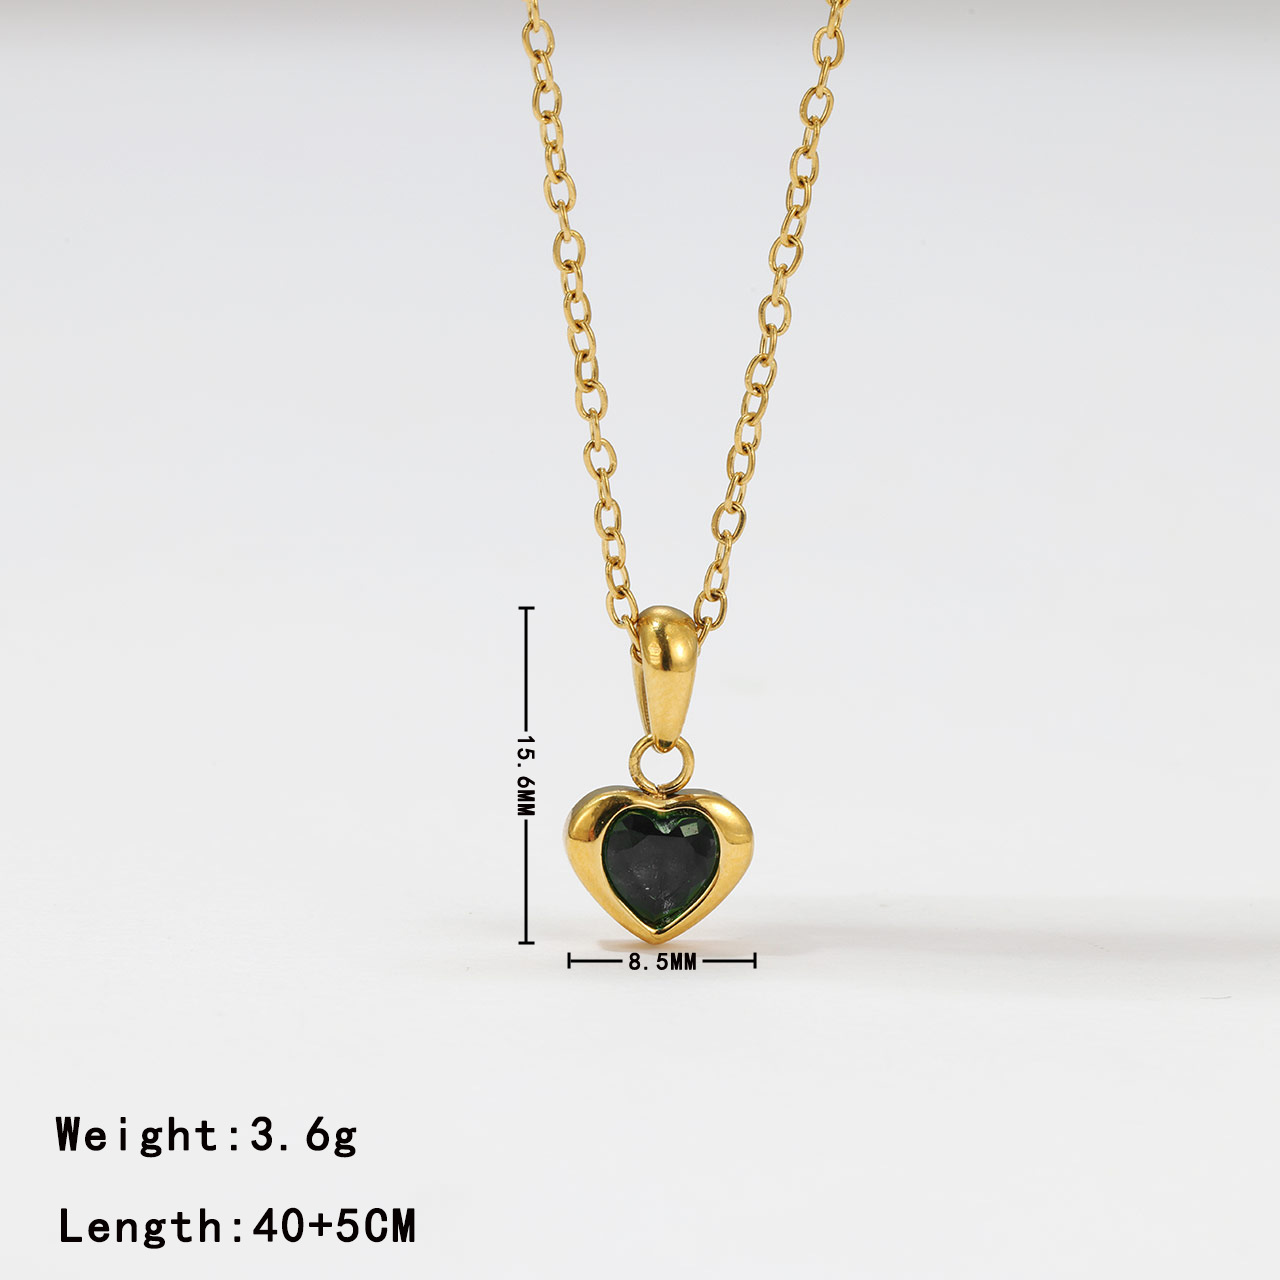 6:Necklace - Gold green zircon